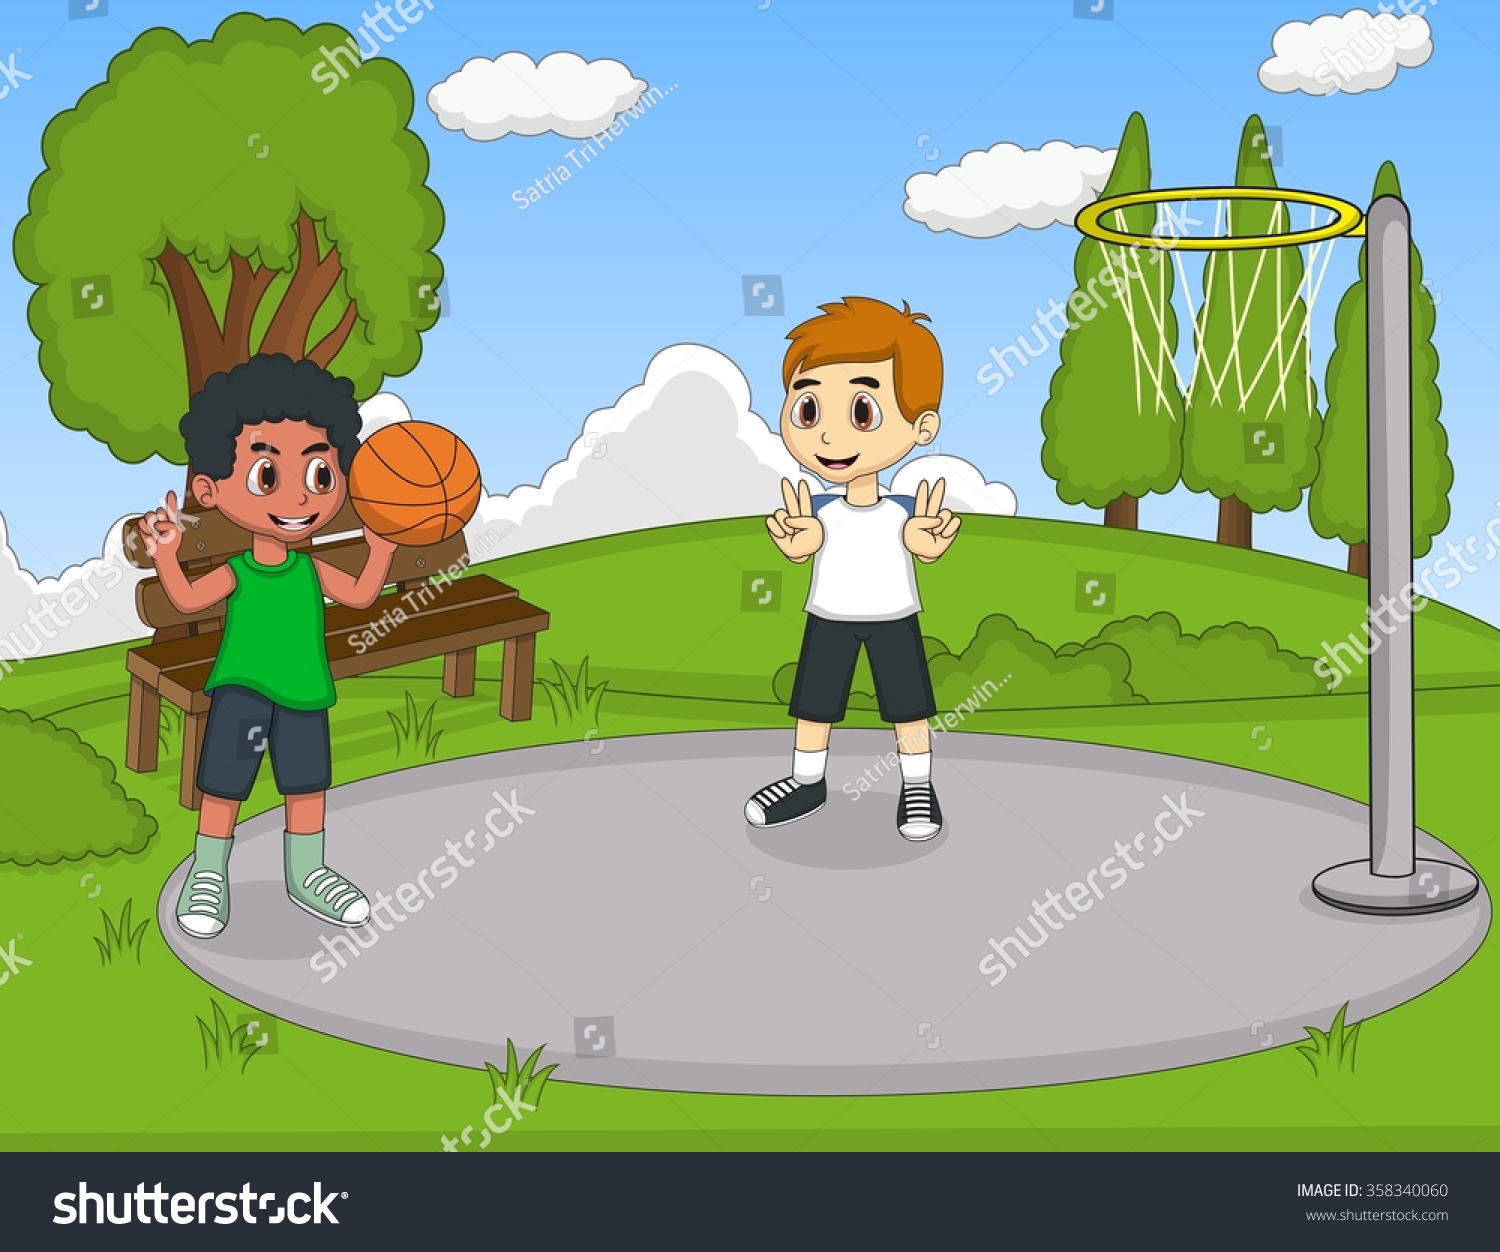 Kids Playing Basketball Park Cartoon Stock Illustration 358340060 ...